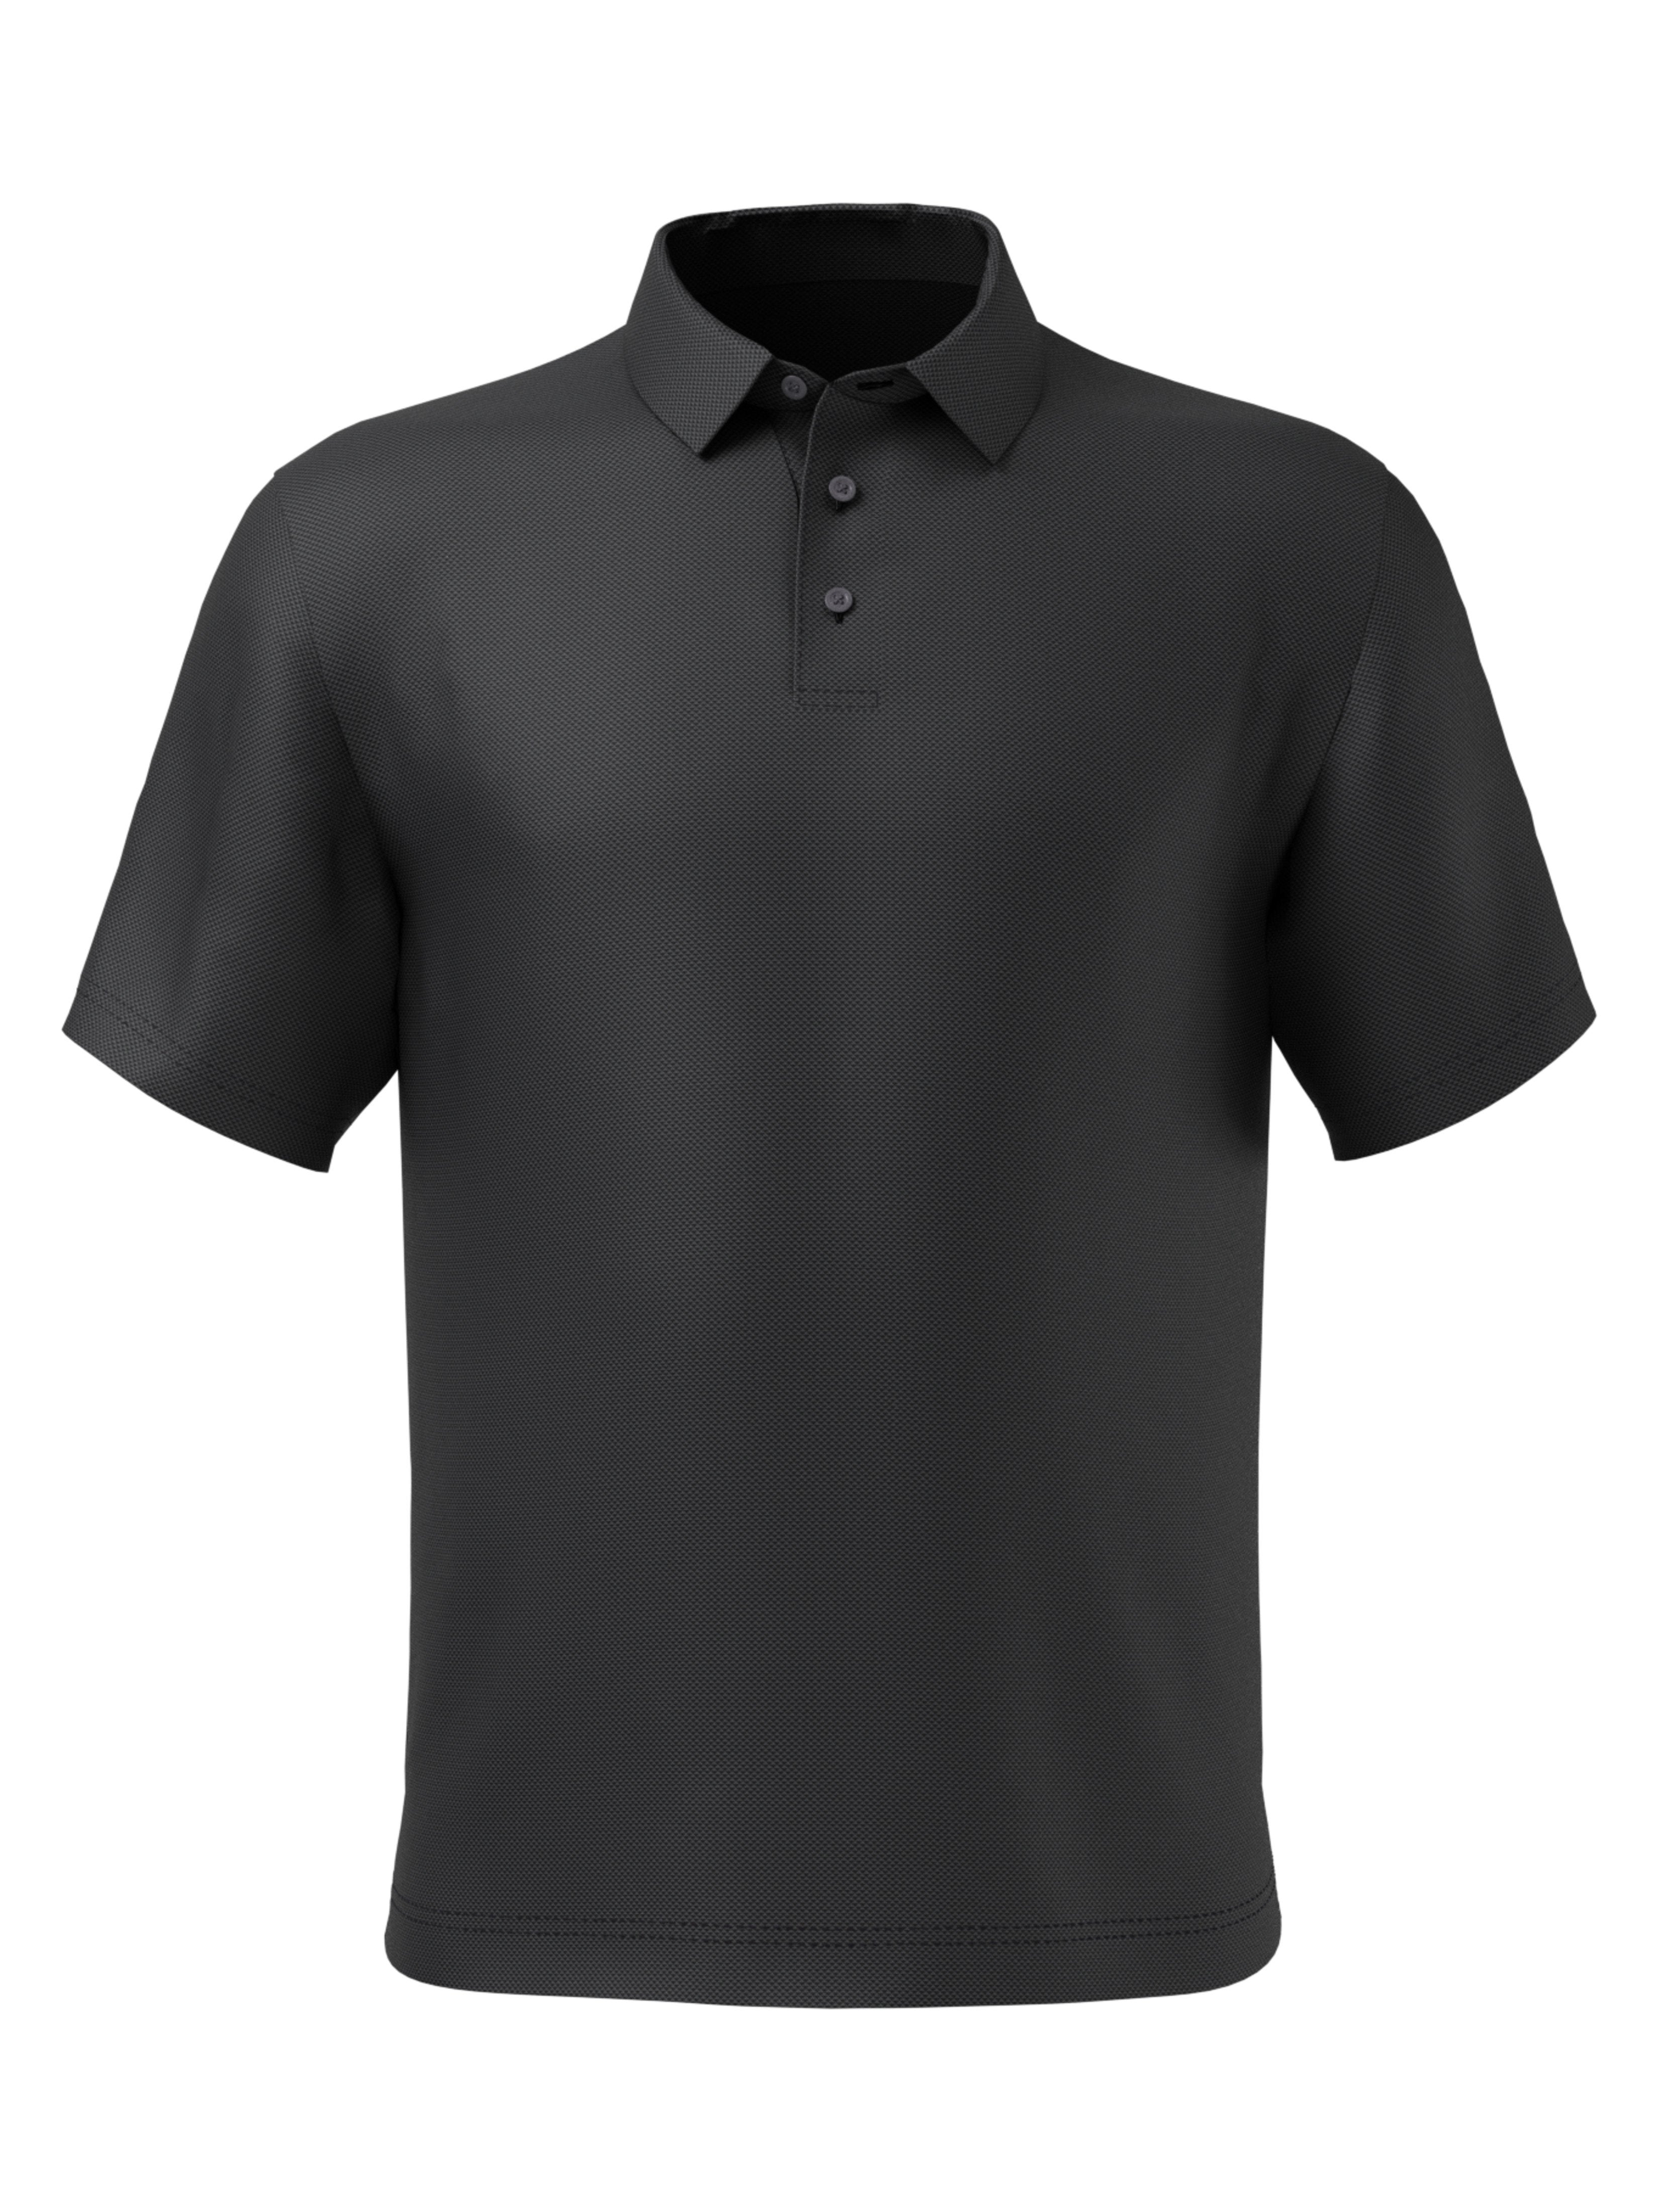 PGA TOUR Apparel Mens Mini Geometric Jacquard Polo Shirt, Size XL, Black, 100% Polyester | Golf Apparel Shop